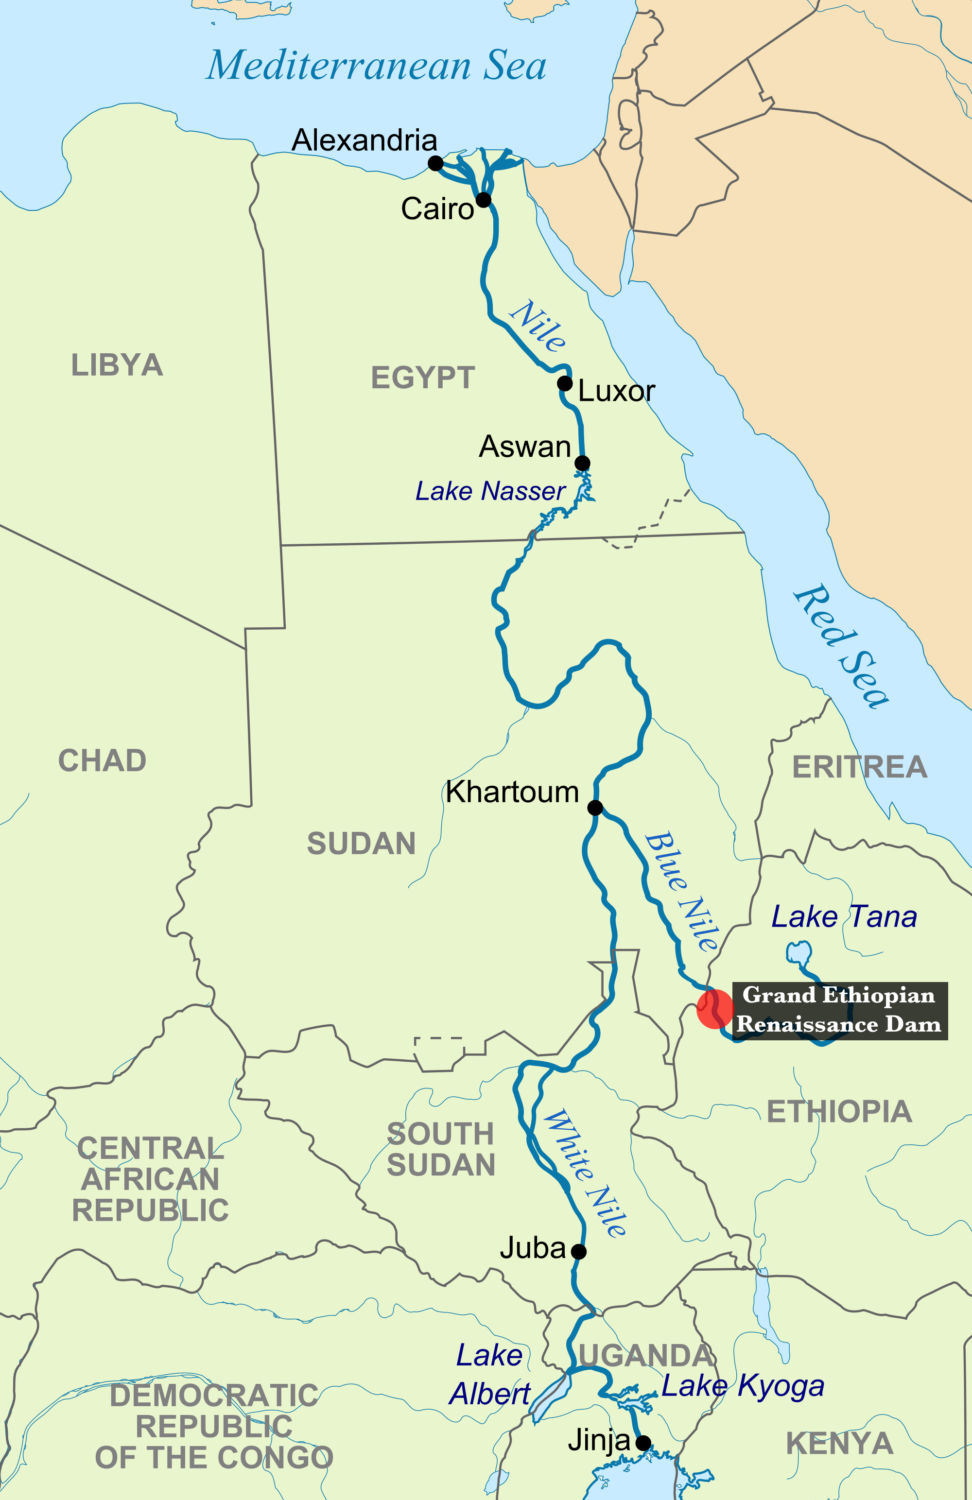 nile river delta africa map